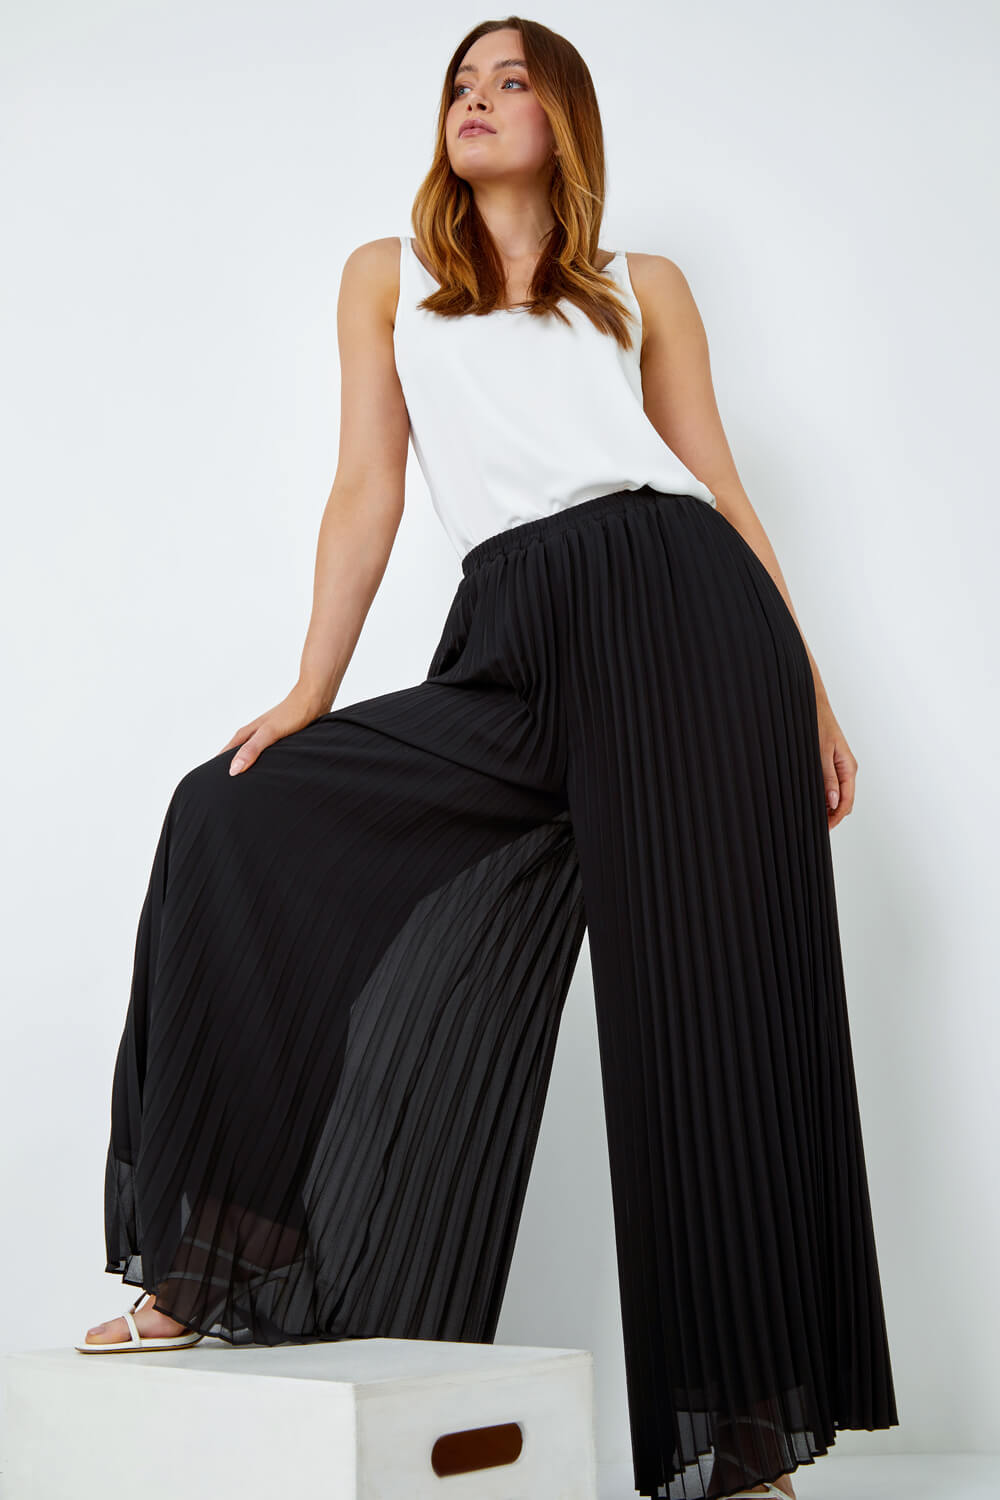 Victoria Beckham Ladies Black High-waist Pleated Trousers, Brand Size 6  TRVV-148 - Apparel - Jomashop